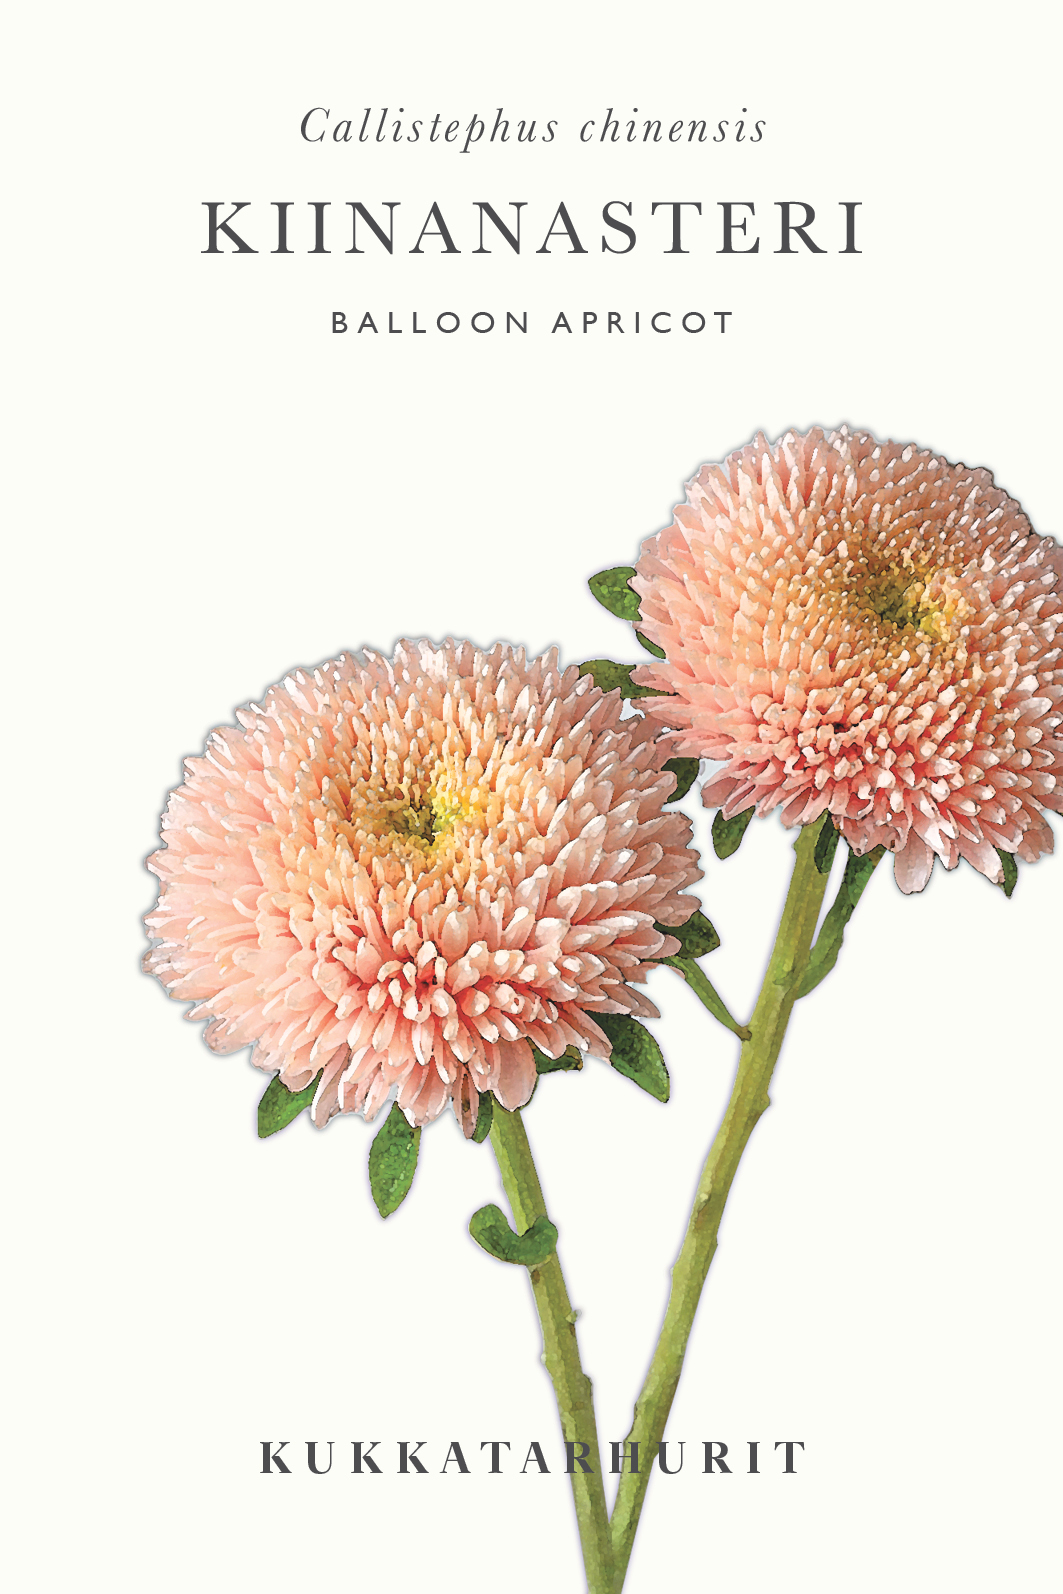 Callistephus chinensis 'Balloon Apricot'